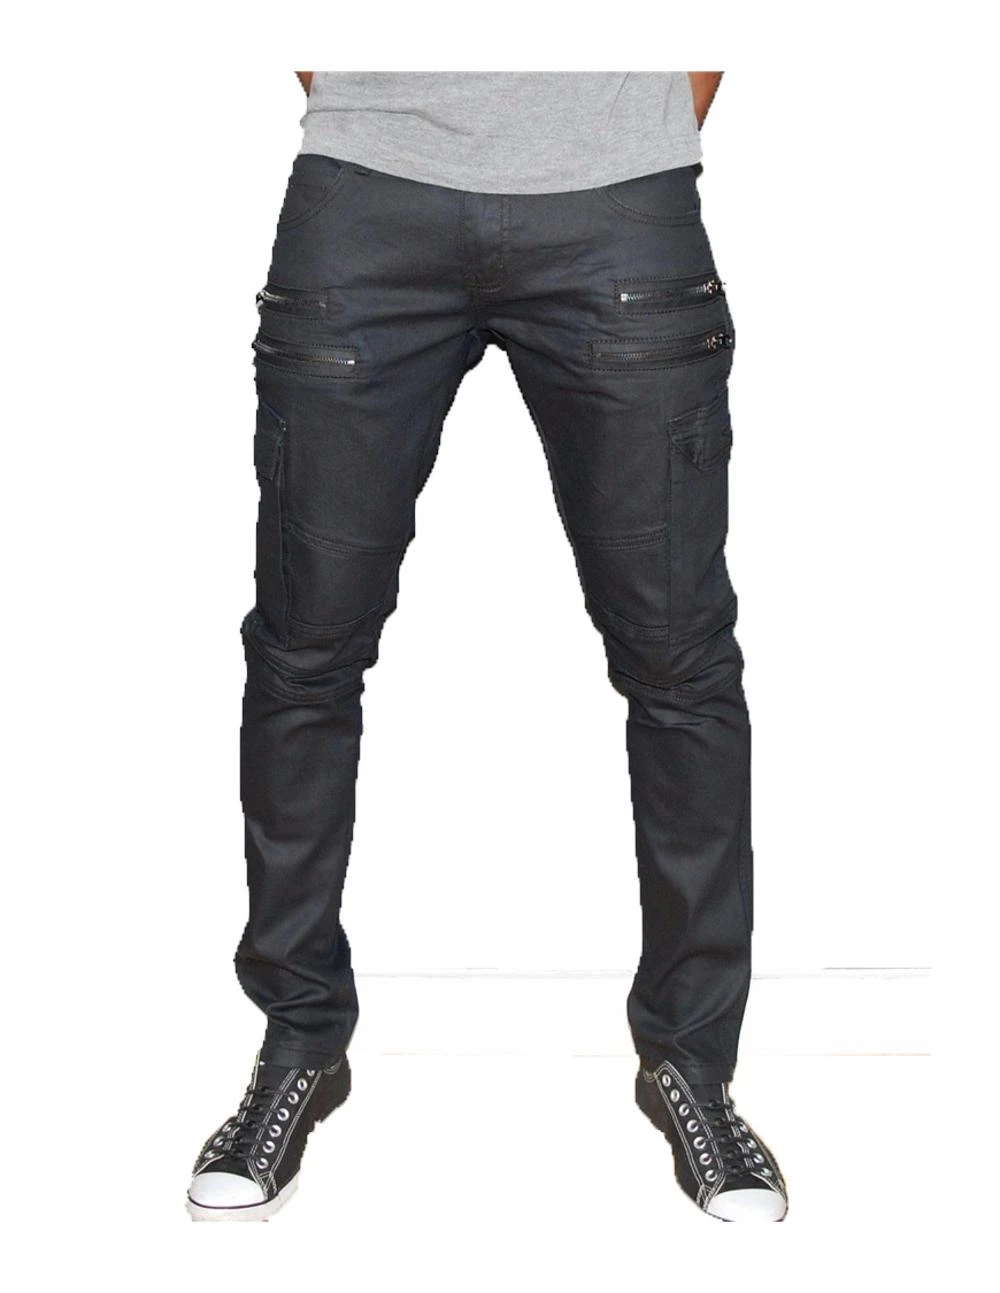 Royal wolf denim jeans manufacturer black coated punk pants slim fit men cargo jeans side zipper mens jeans